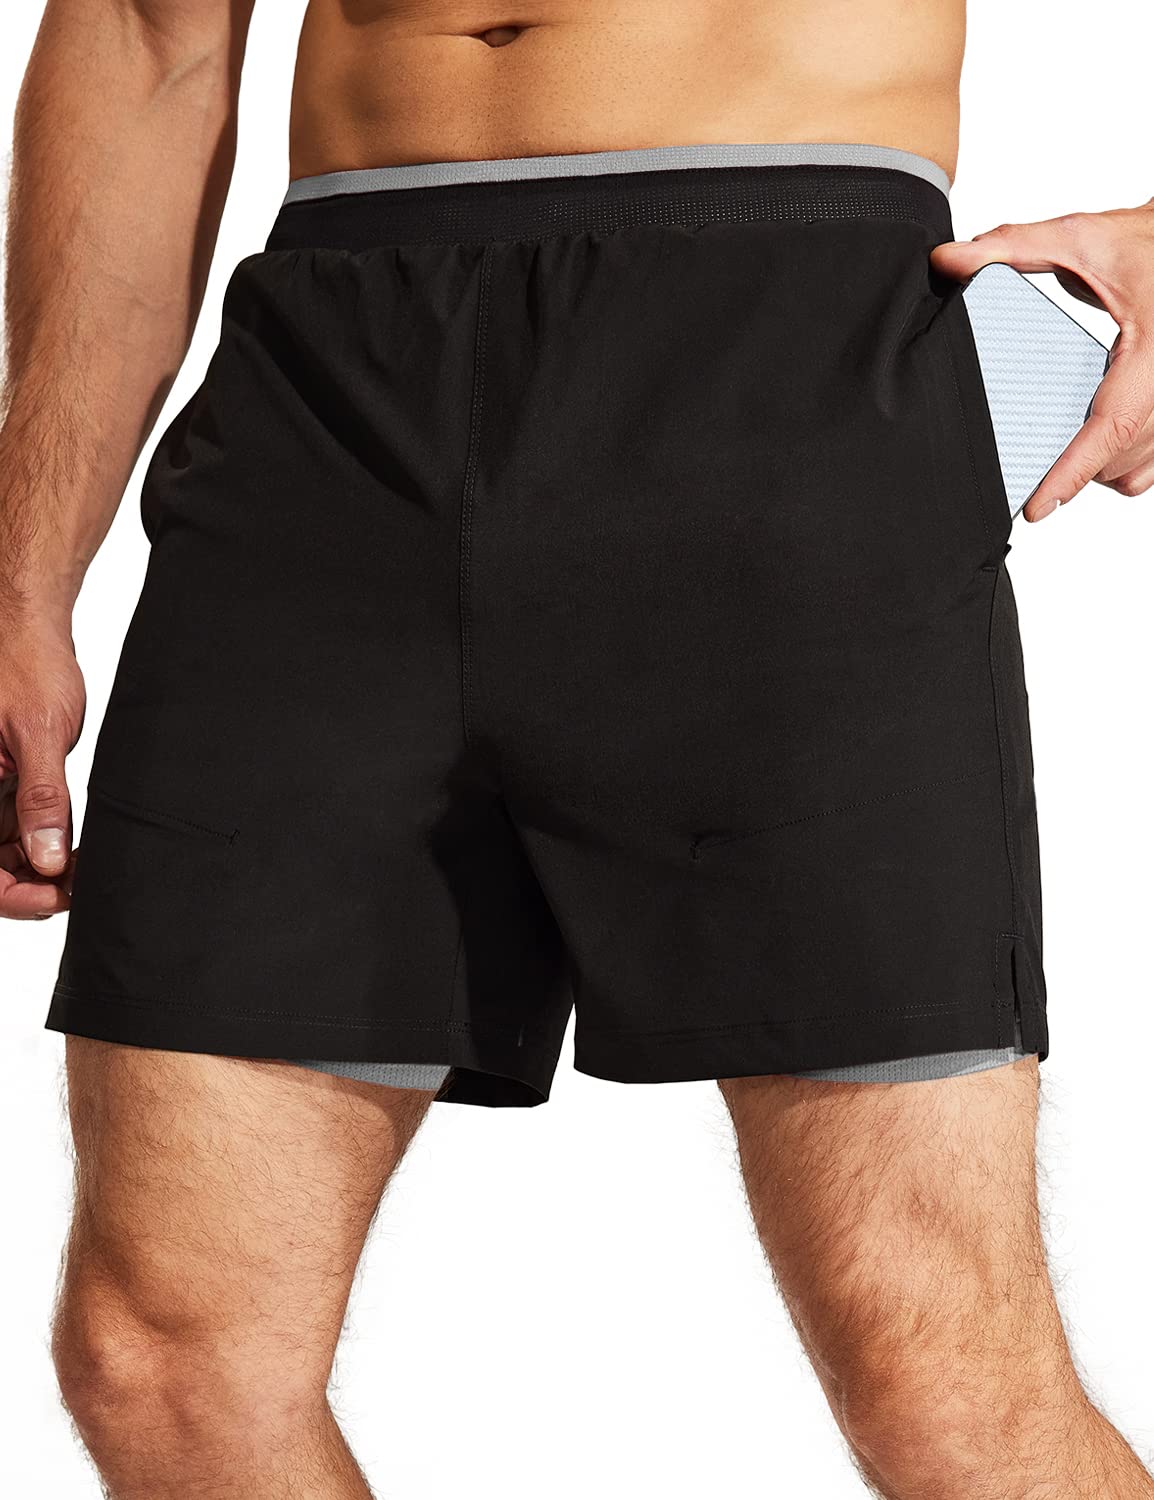 Men’s Running Shorts - Dry+ Black